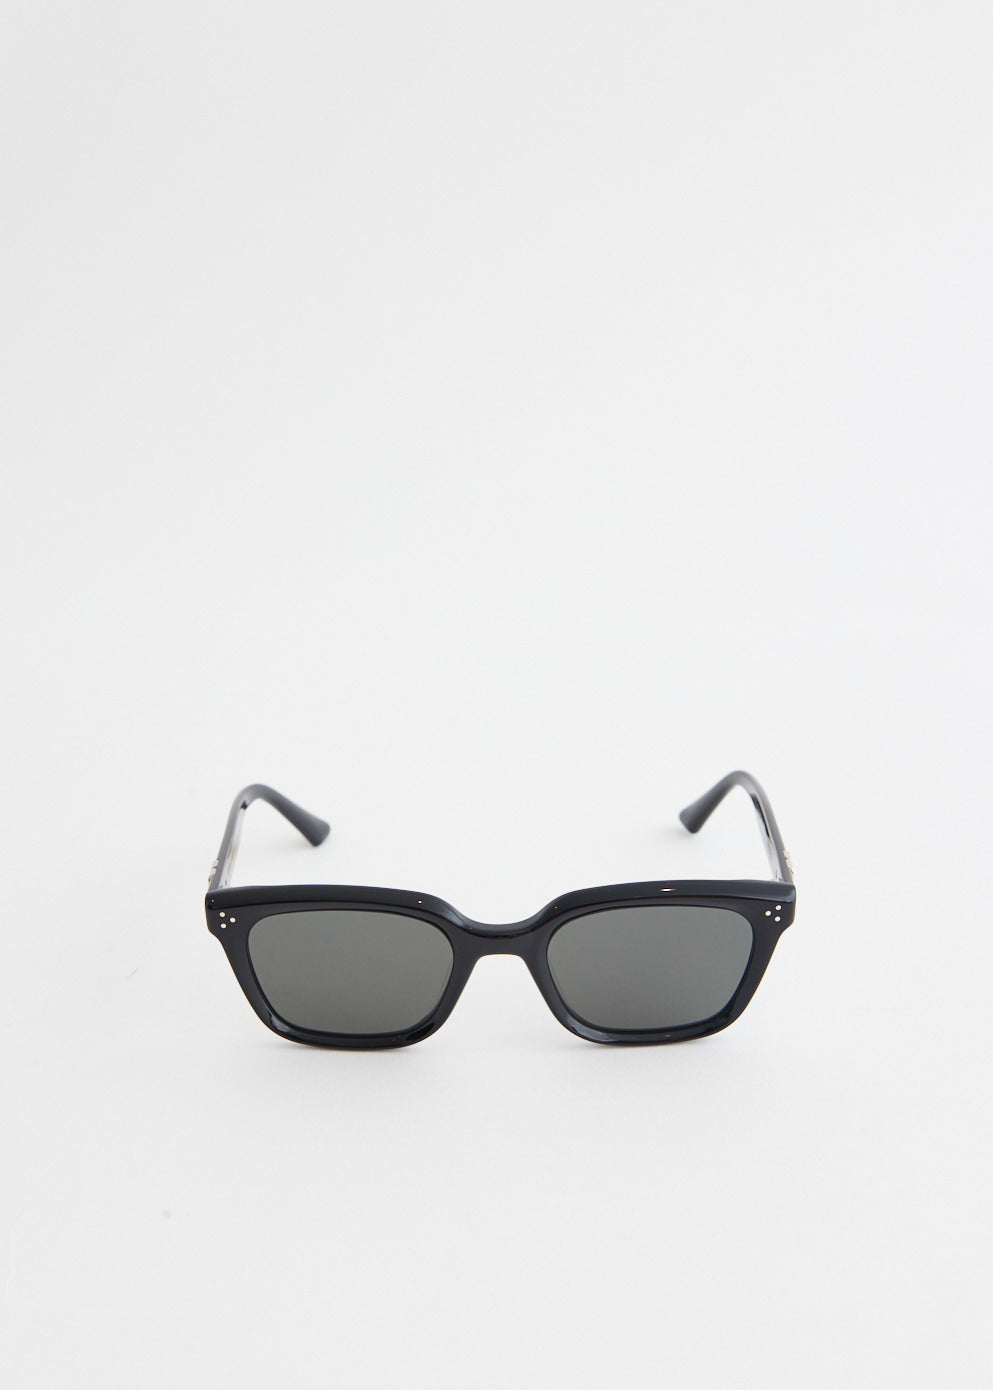 Musee-01 Sunglasses